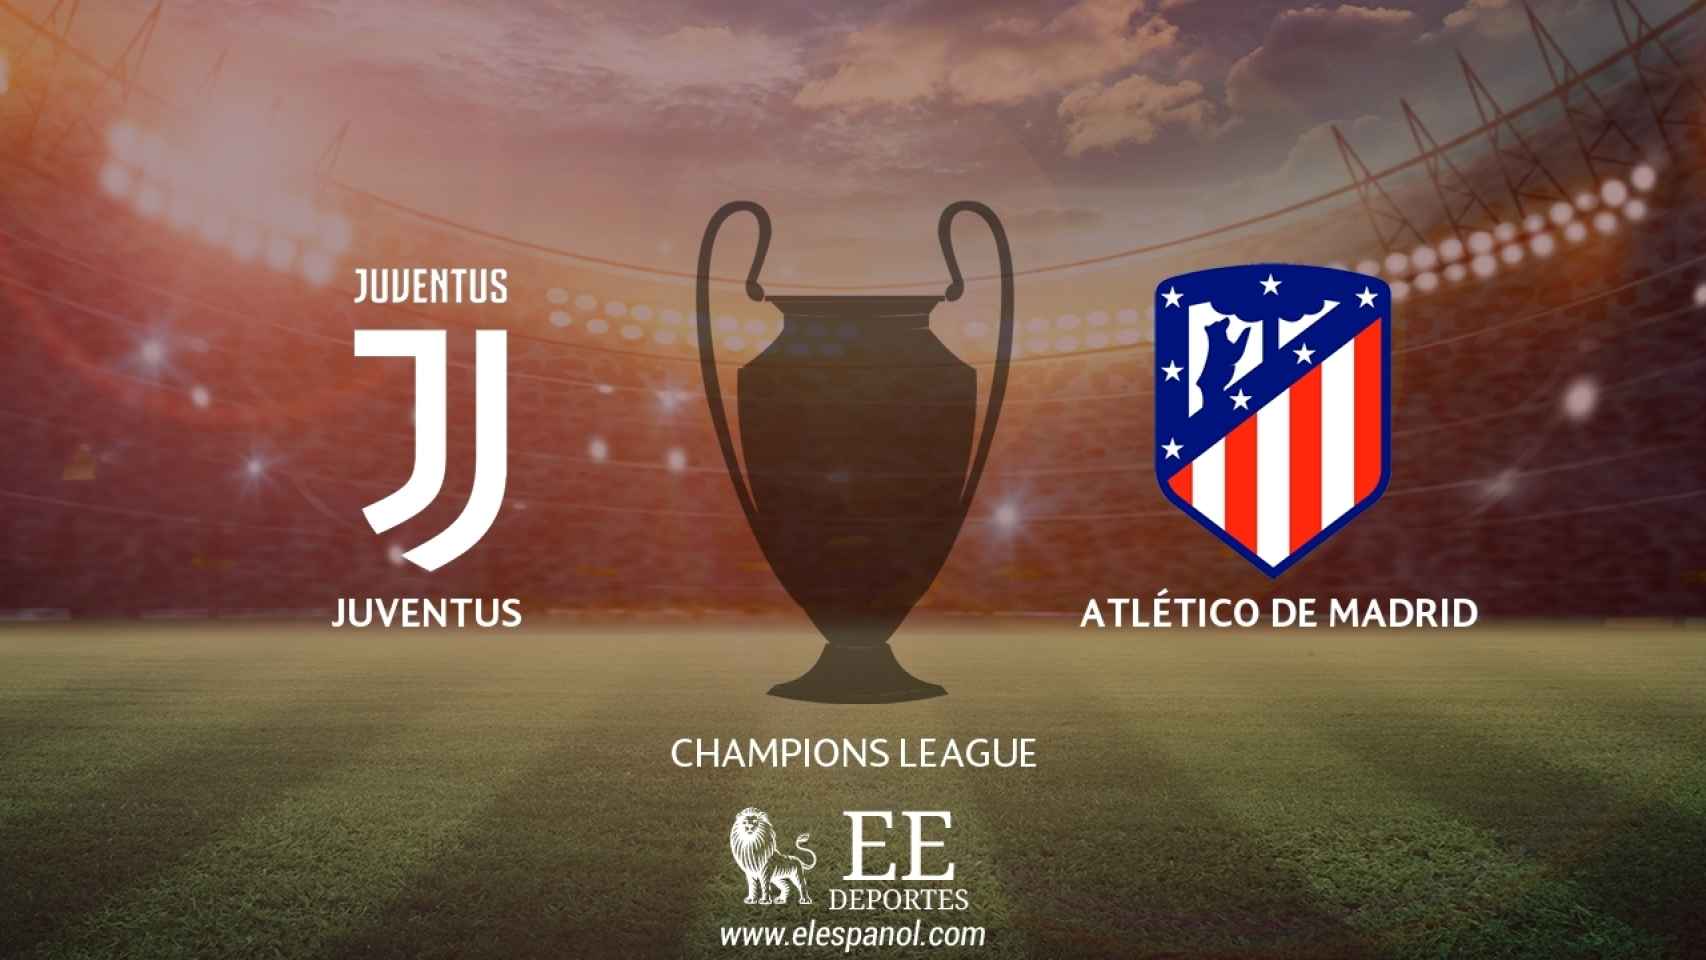 Juventus - Atlético de Madrid